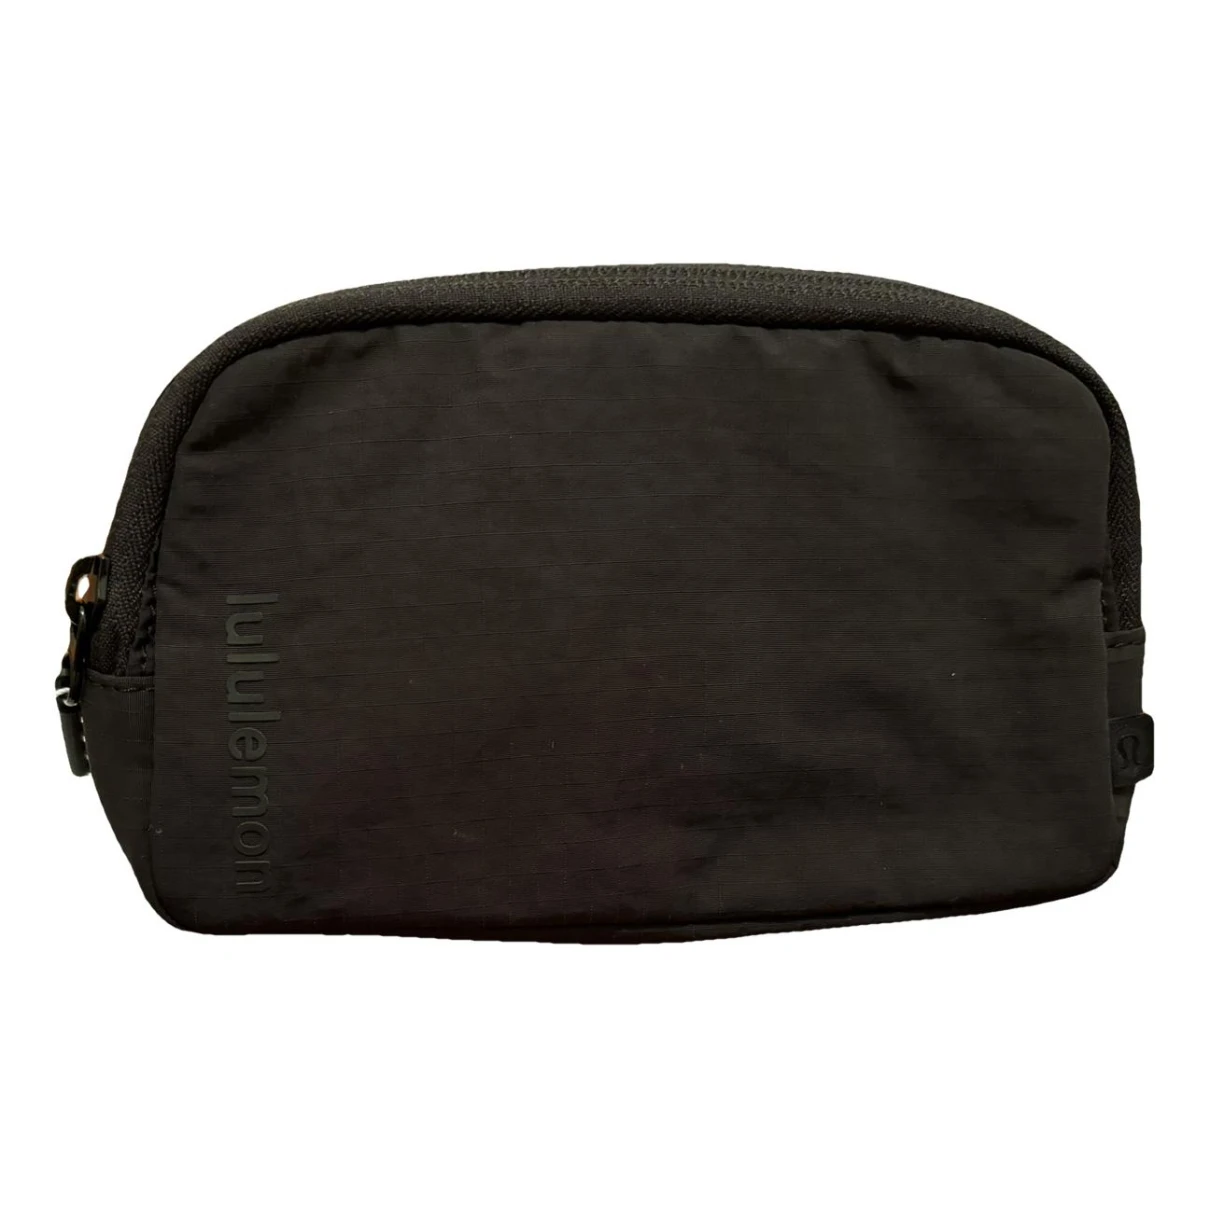 Pre-owned Lululemon Travel Bag In Black